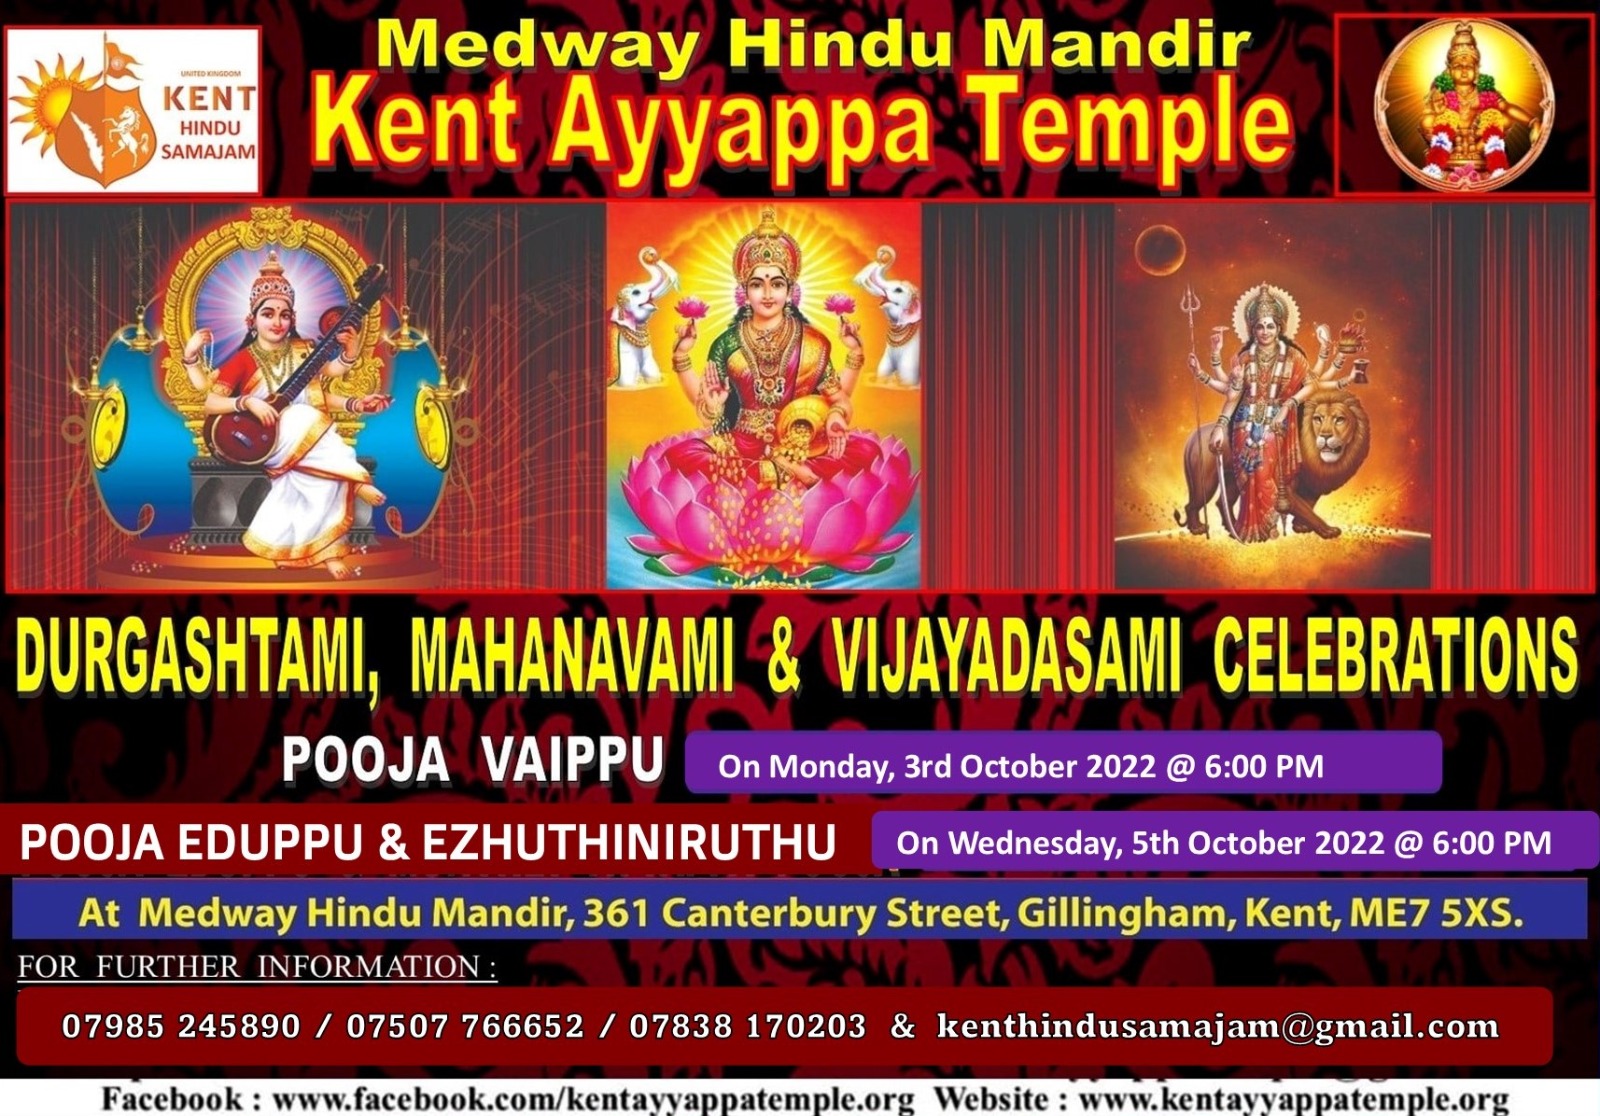 Kent Ayyappa Temple 2022 Vidhhyarambham poster